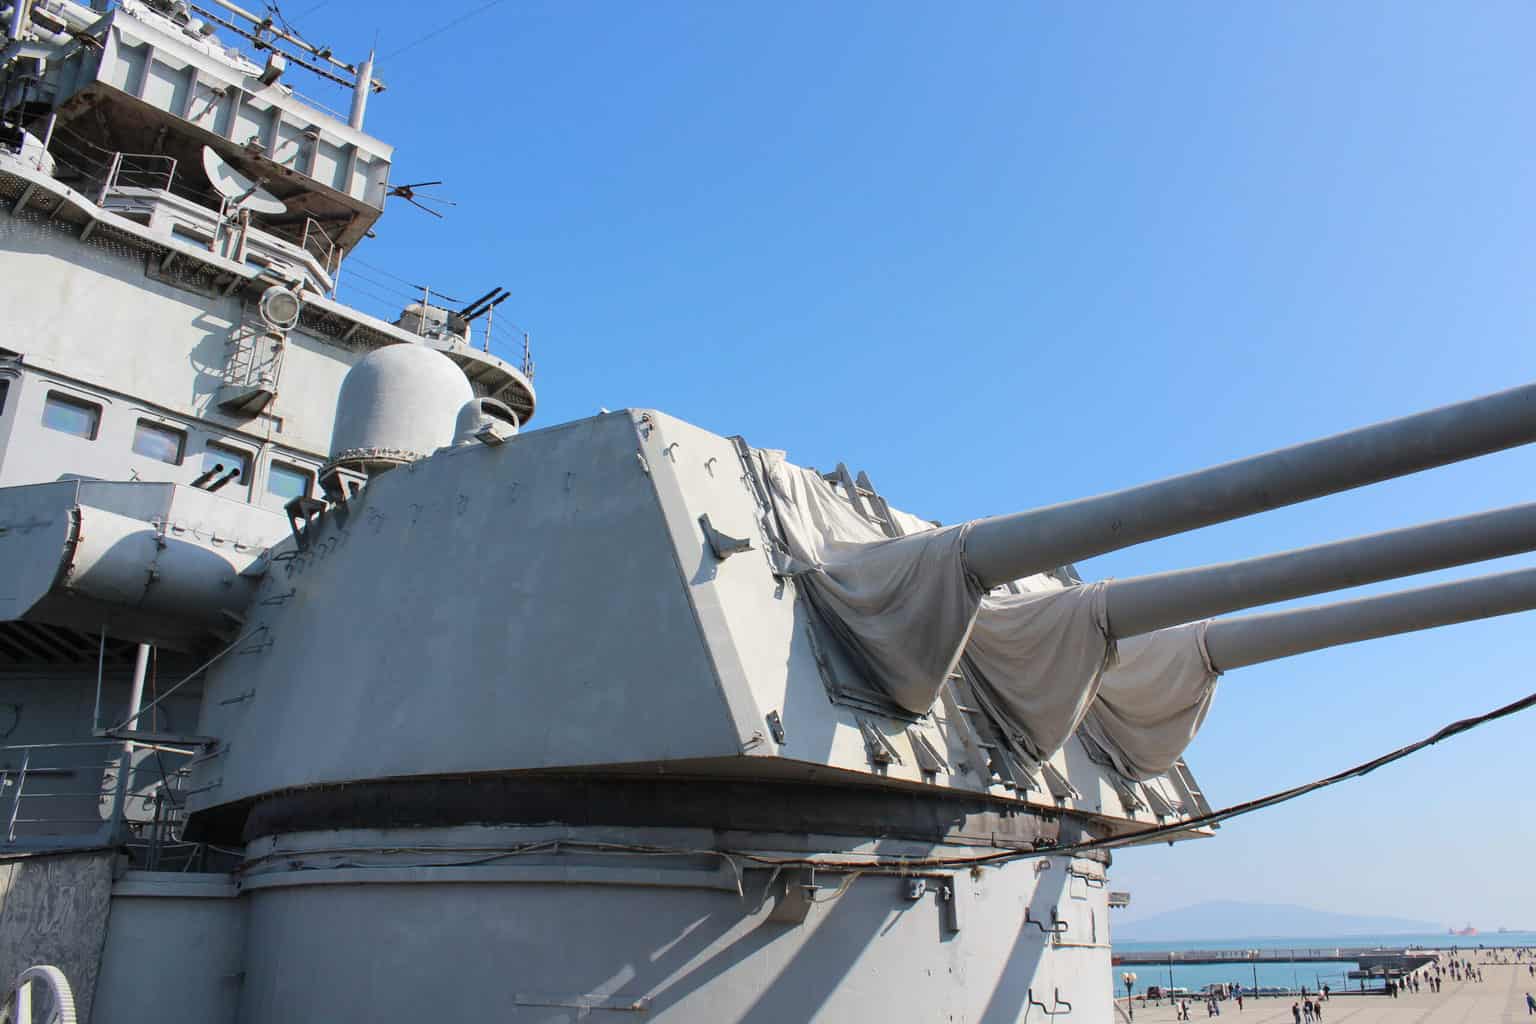 Close up shot of a battleship cannon